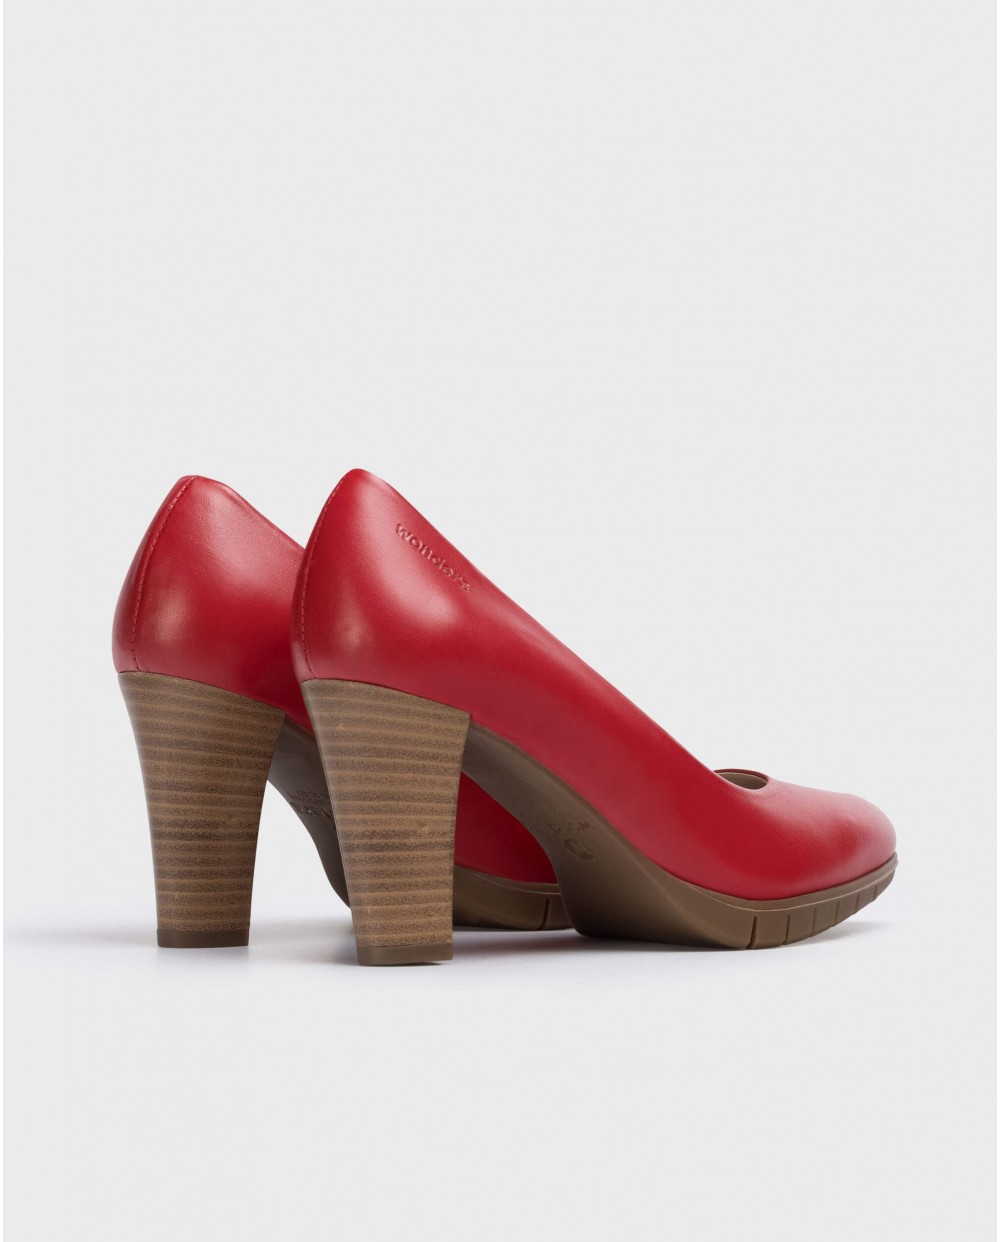 High heeled leather court shoe